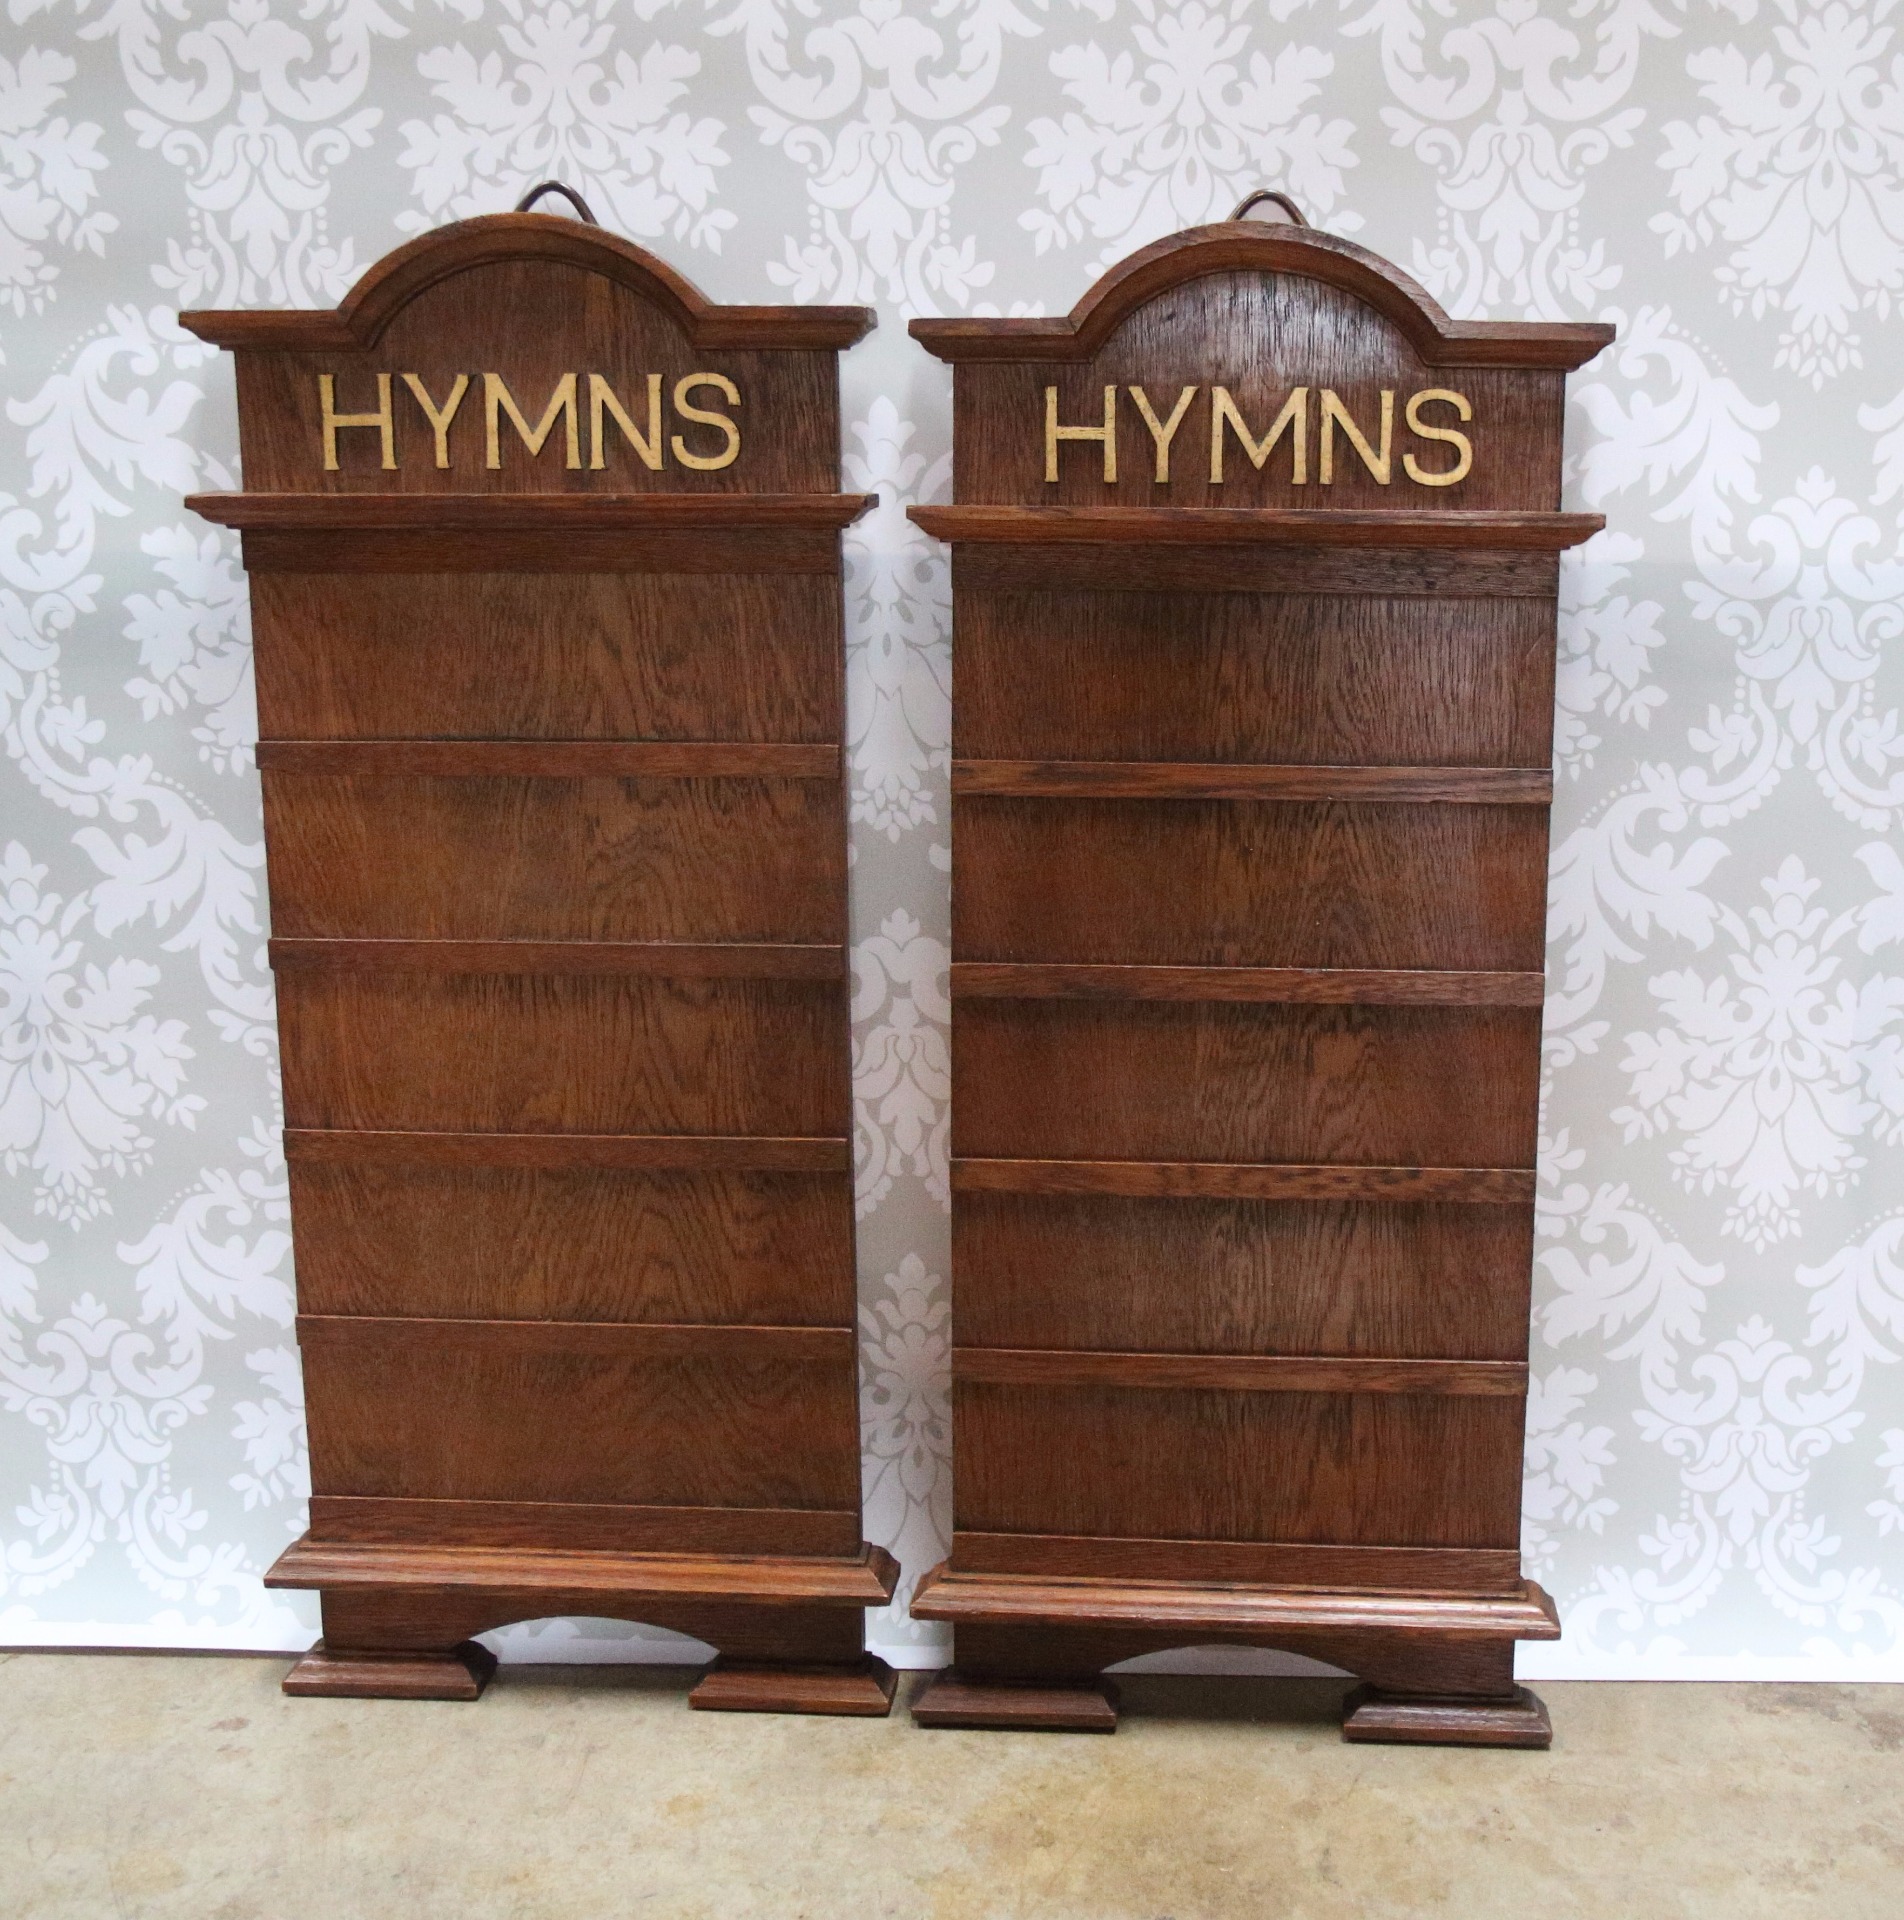 Antique Hymn Boards